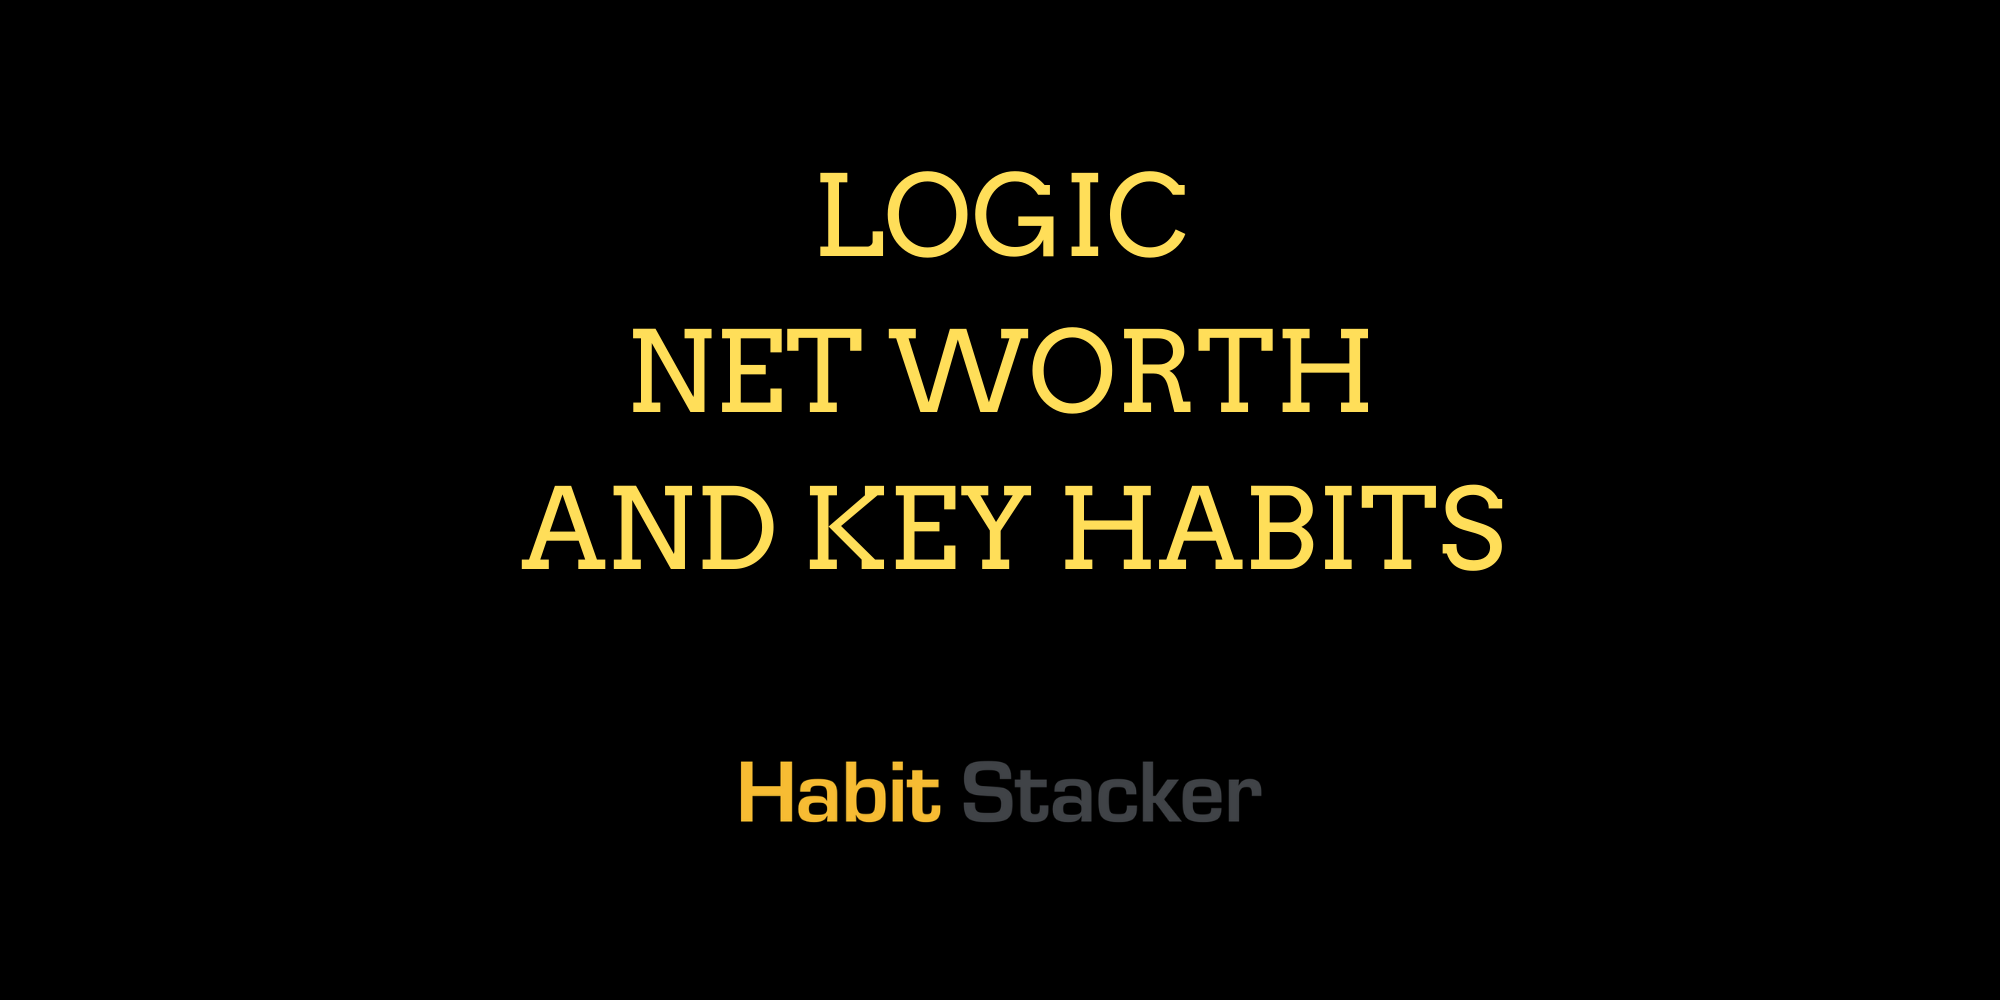 Logic Net Worth and Key Habits